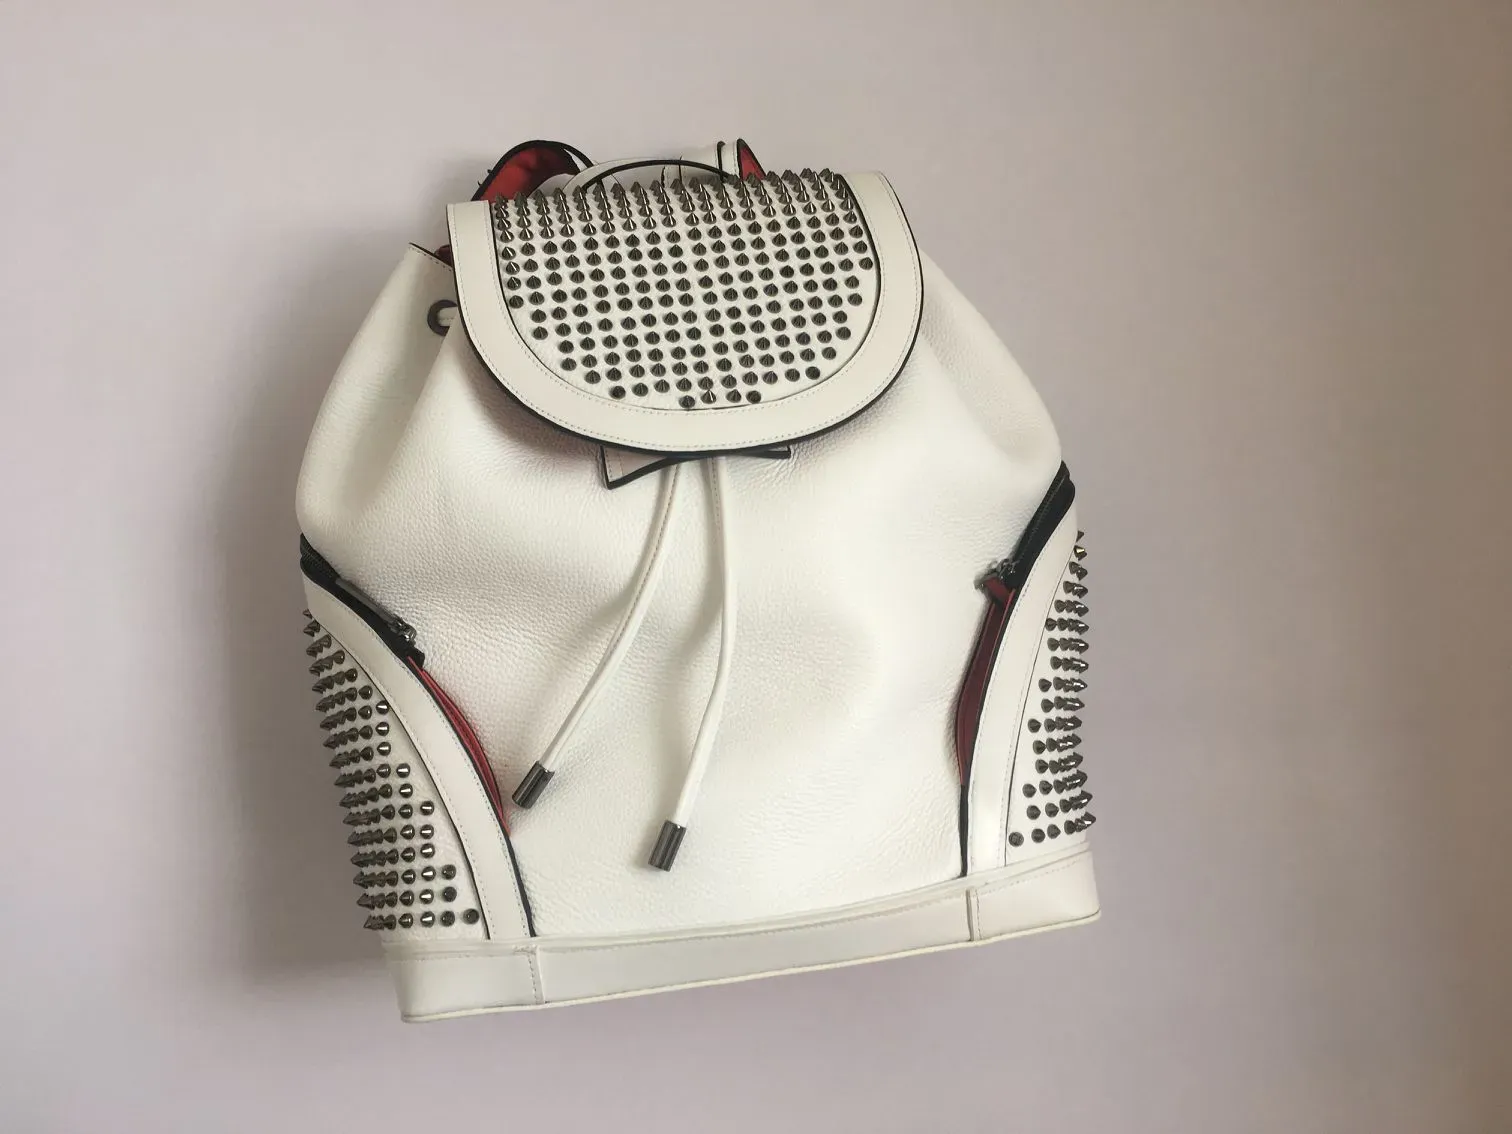 Top New Fashion backpack Luxury handbag Designer high quality lovers school bag fashion handbags studded rivets real leather women269v